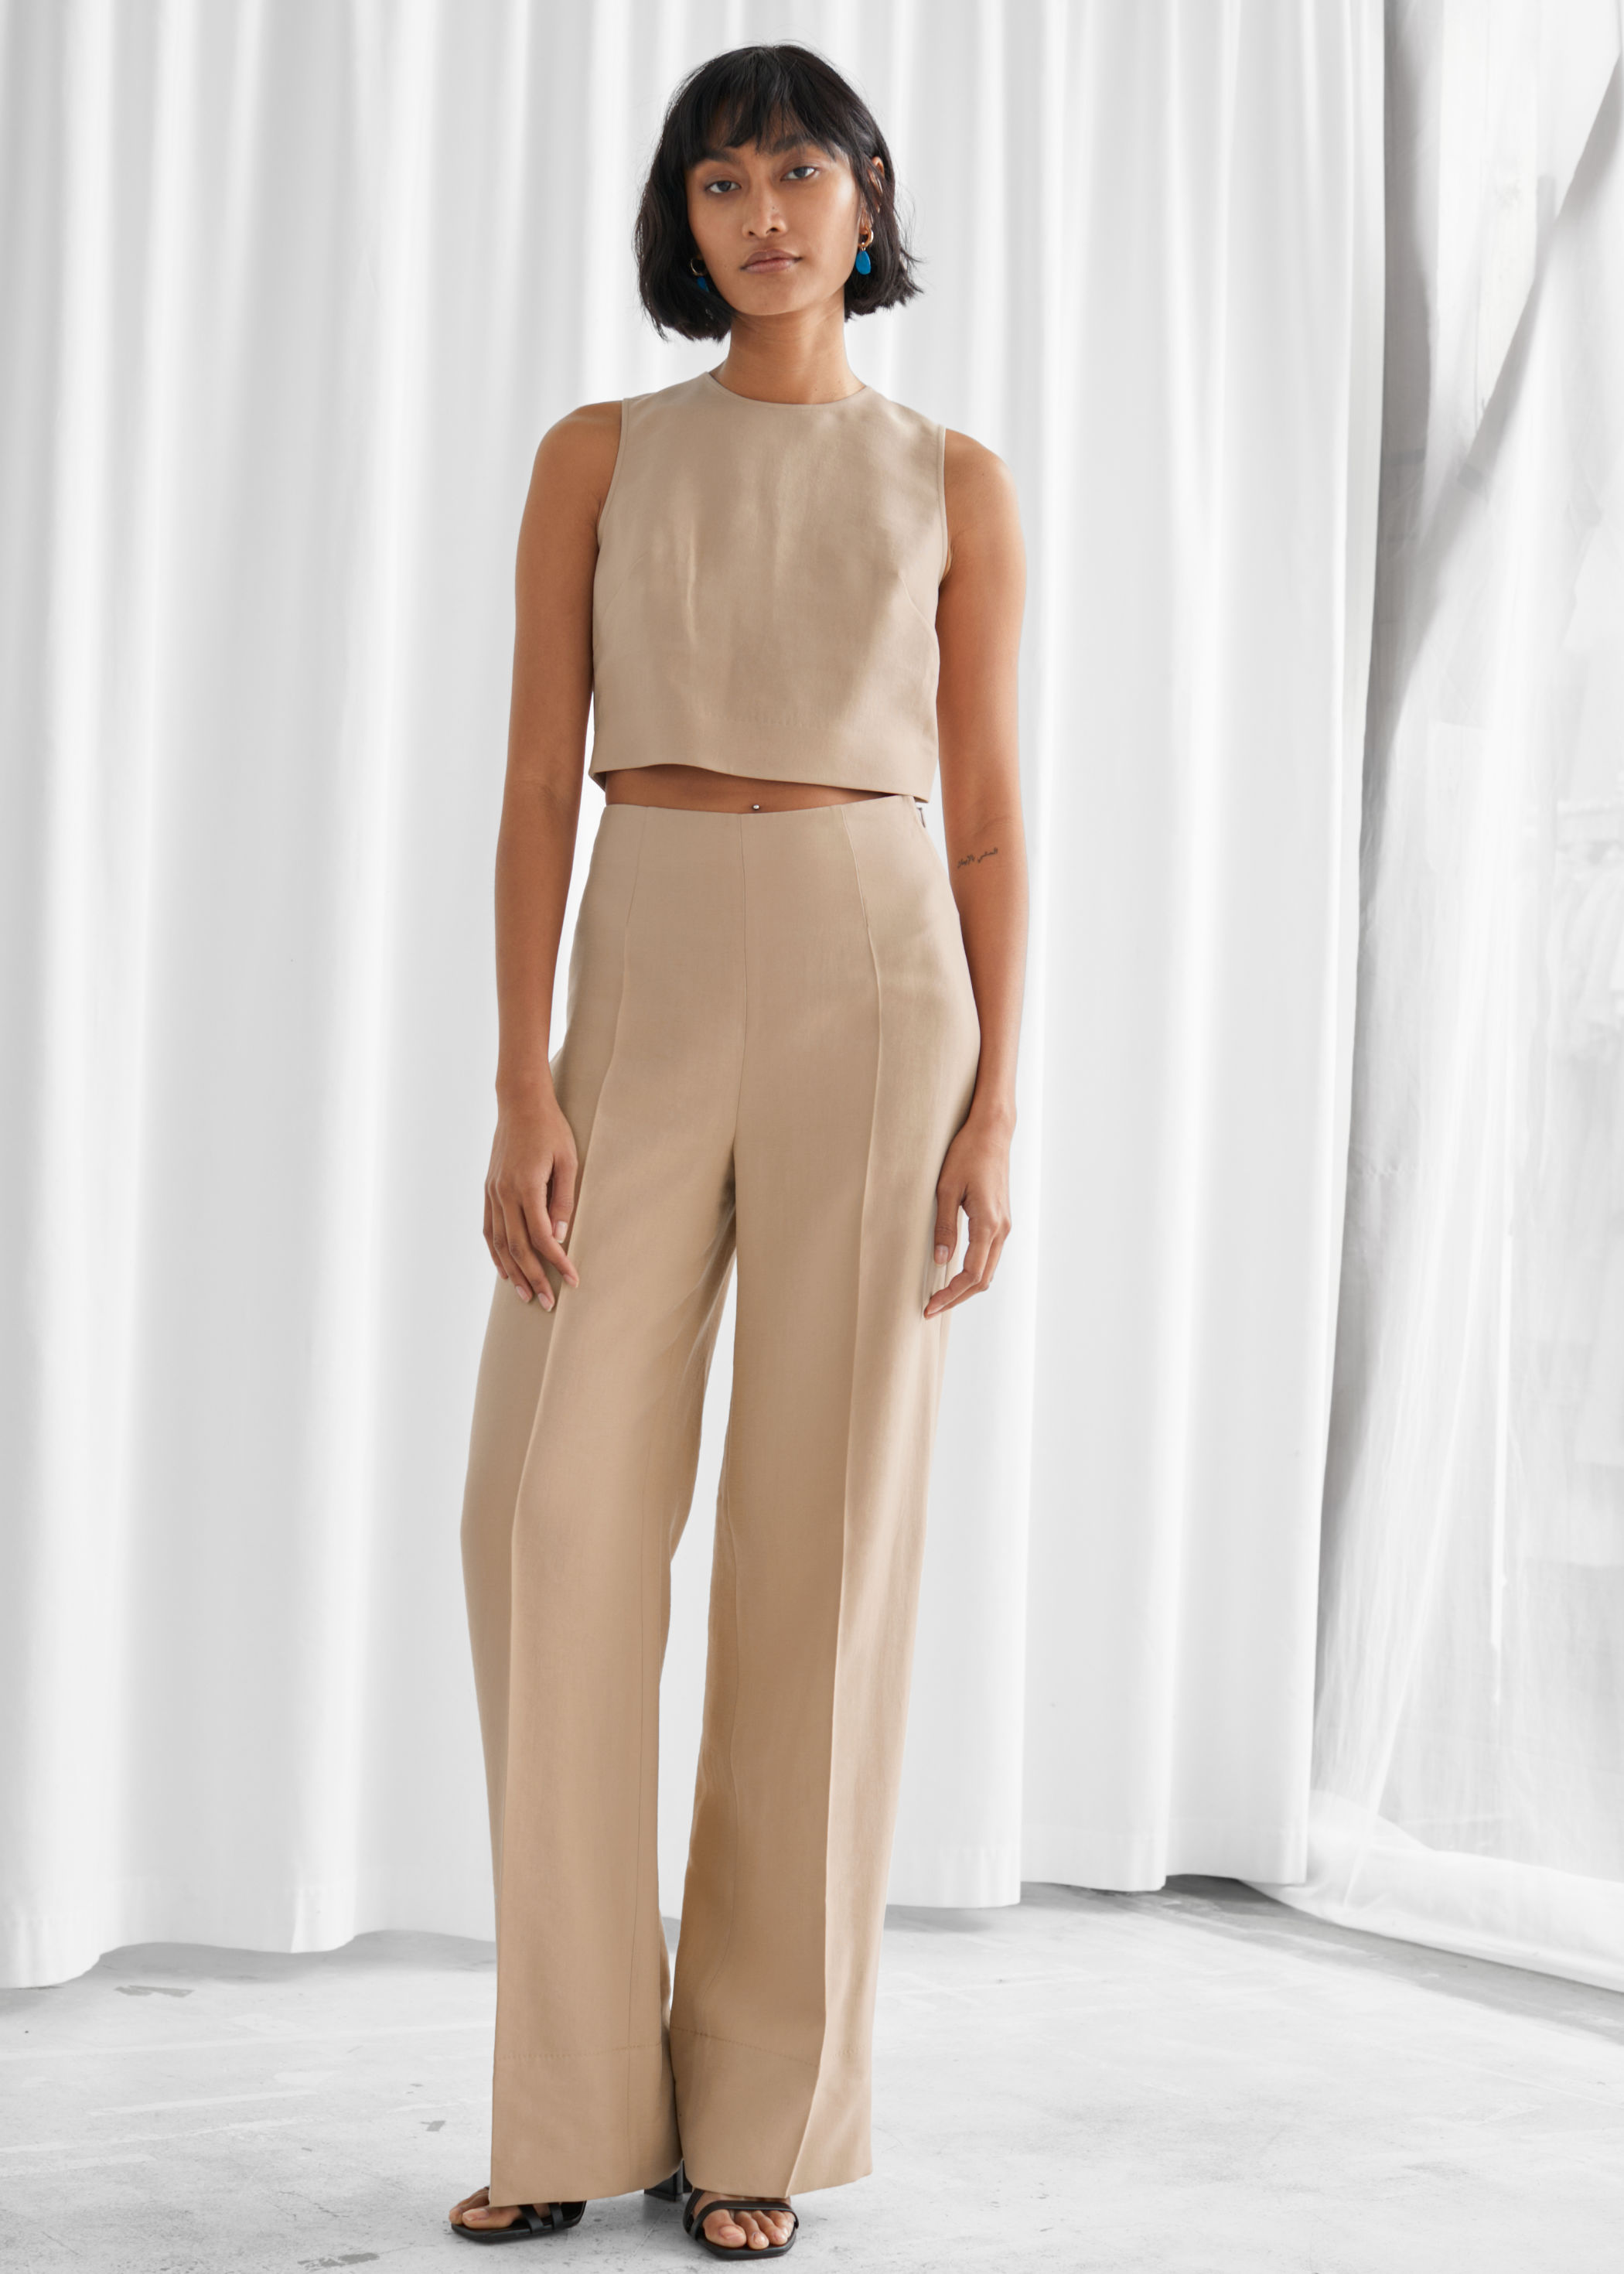 Matching top & Trouser Set For Women - Evilato online Shopping